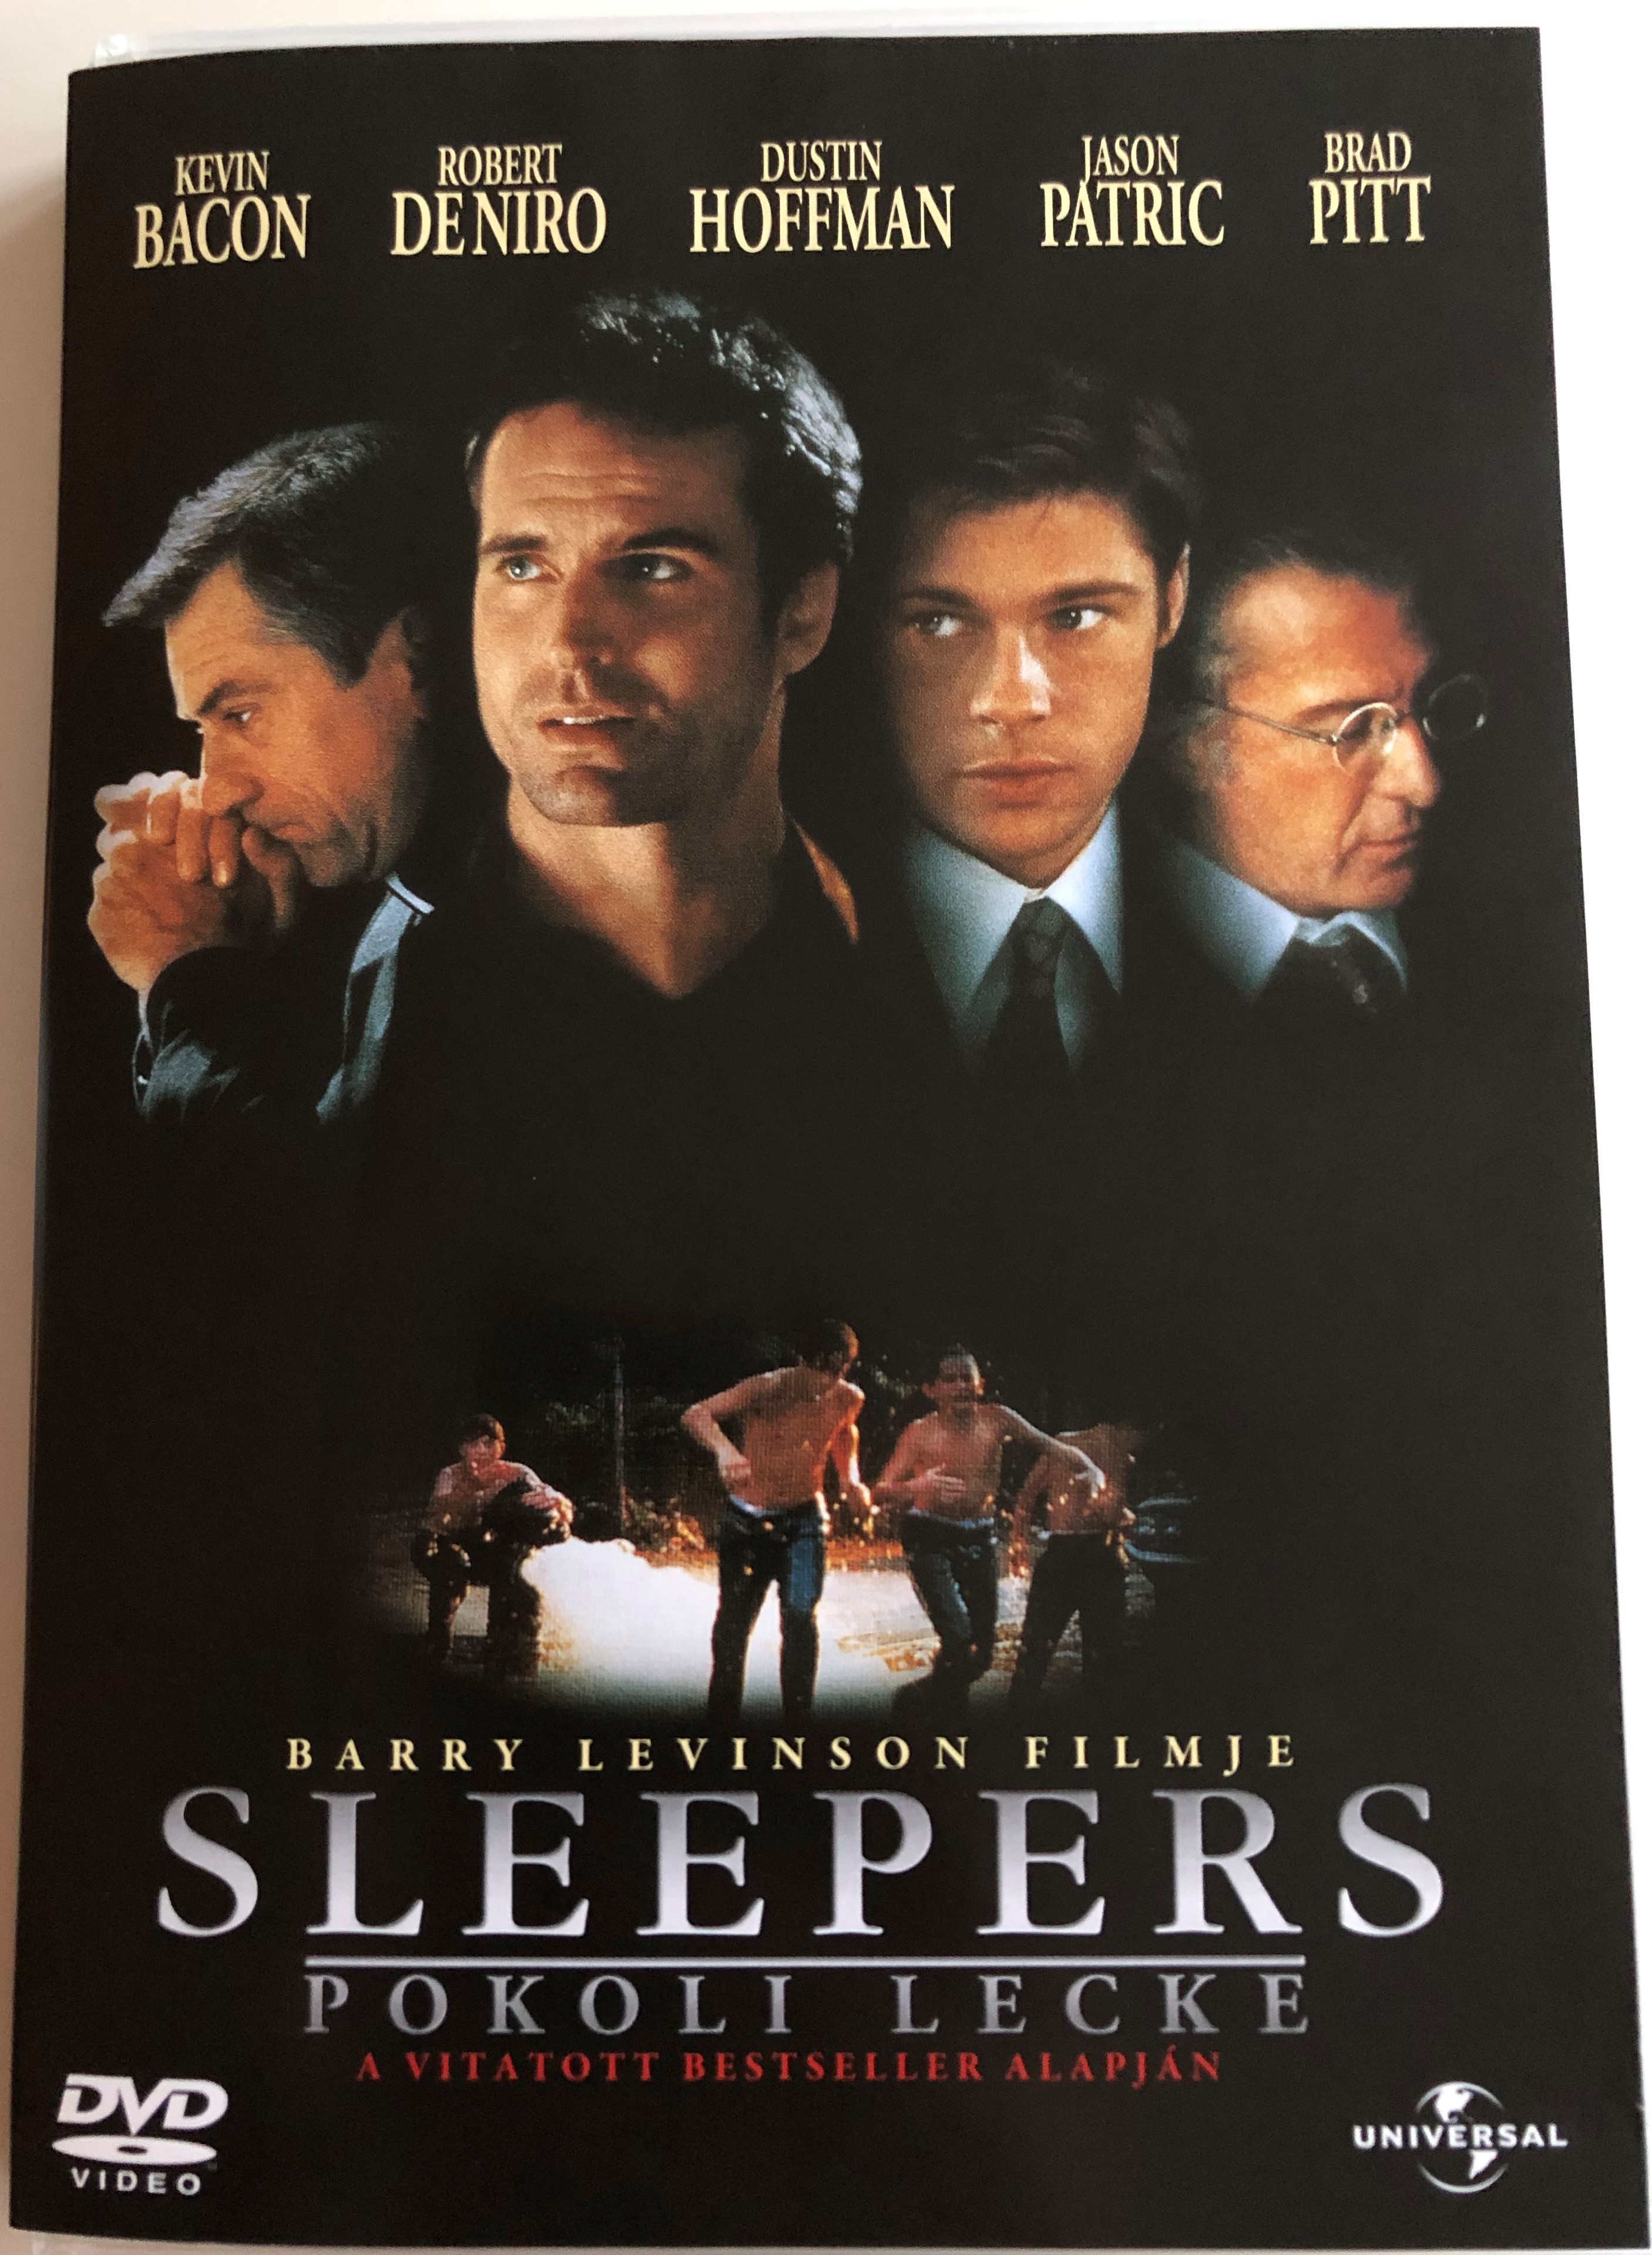 Sleepers DVD 1996 Pokoli lecke / Directed by Barry Levinson / Starring:  Kevin Bacon, Robert de Niro, Dustin Hoffman, Brad Pitt - bibleinmylanguage